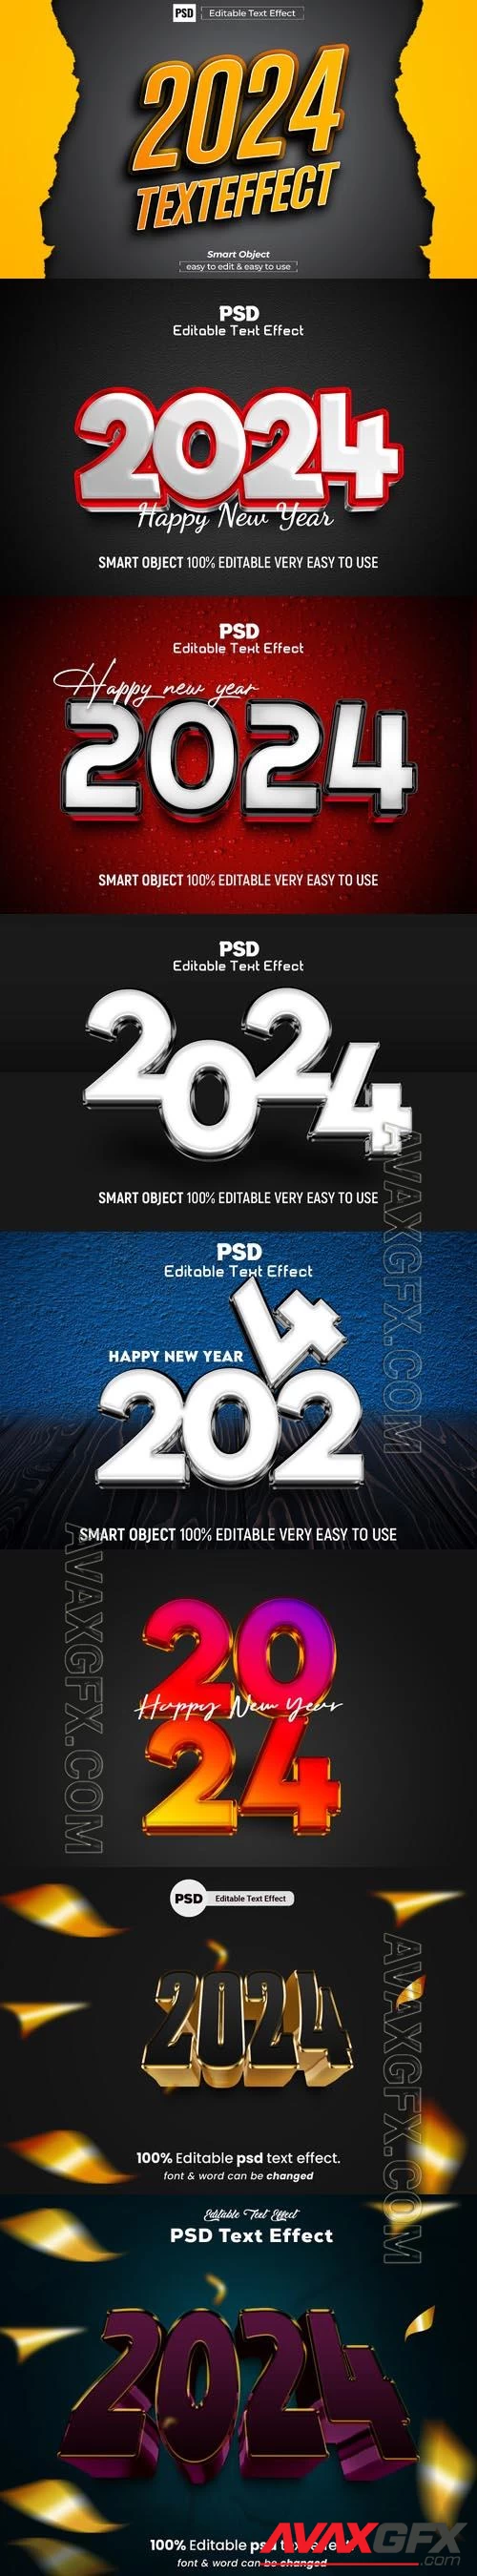 PSD new year 2024 3d editable text effect vol 4